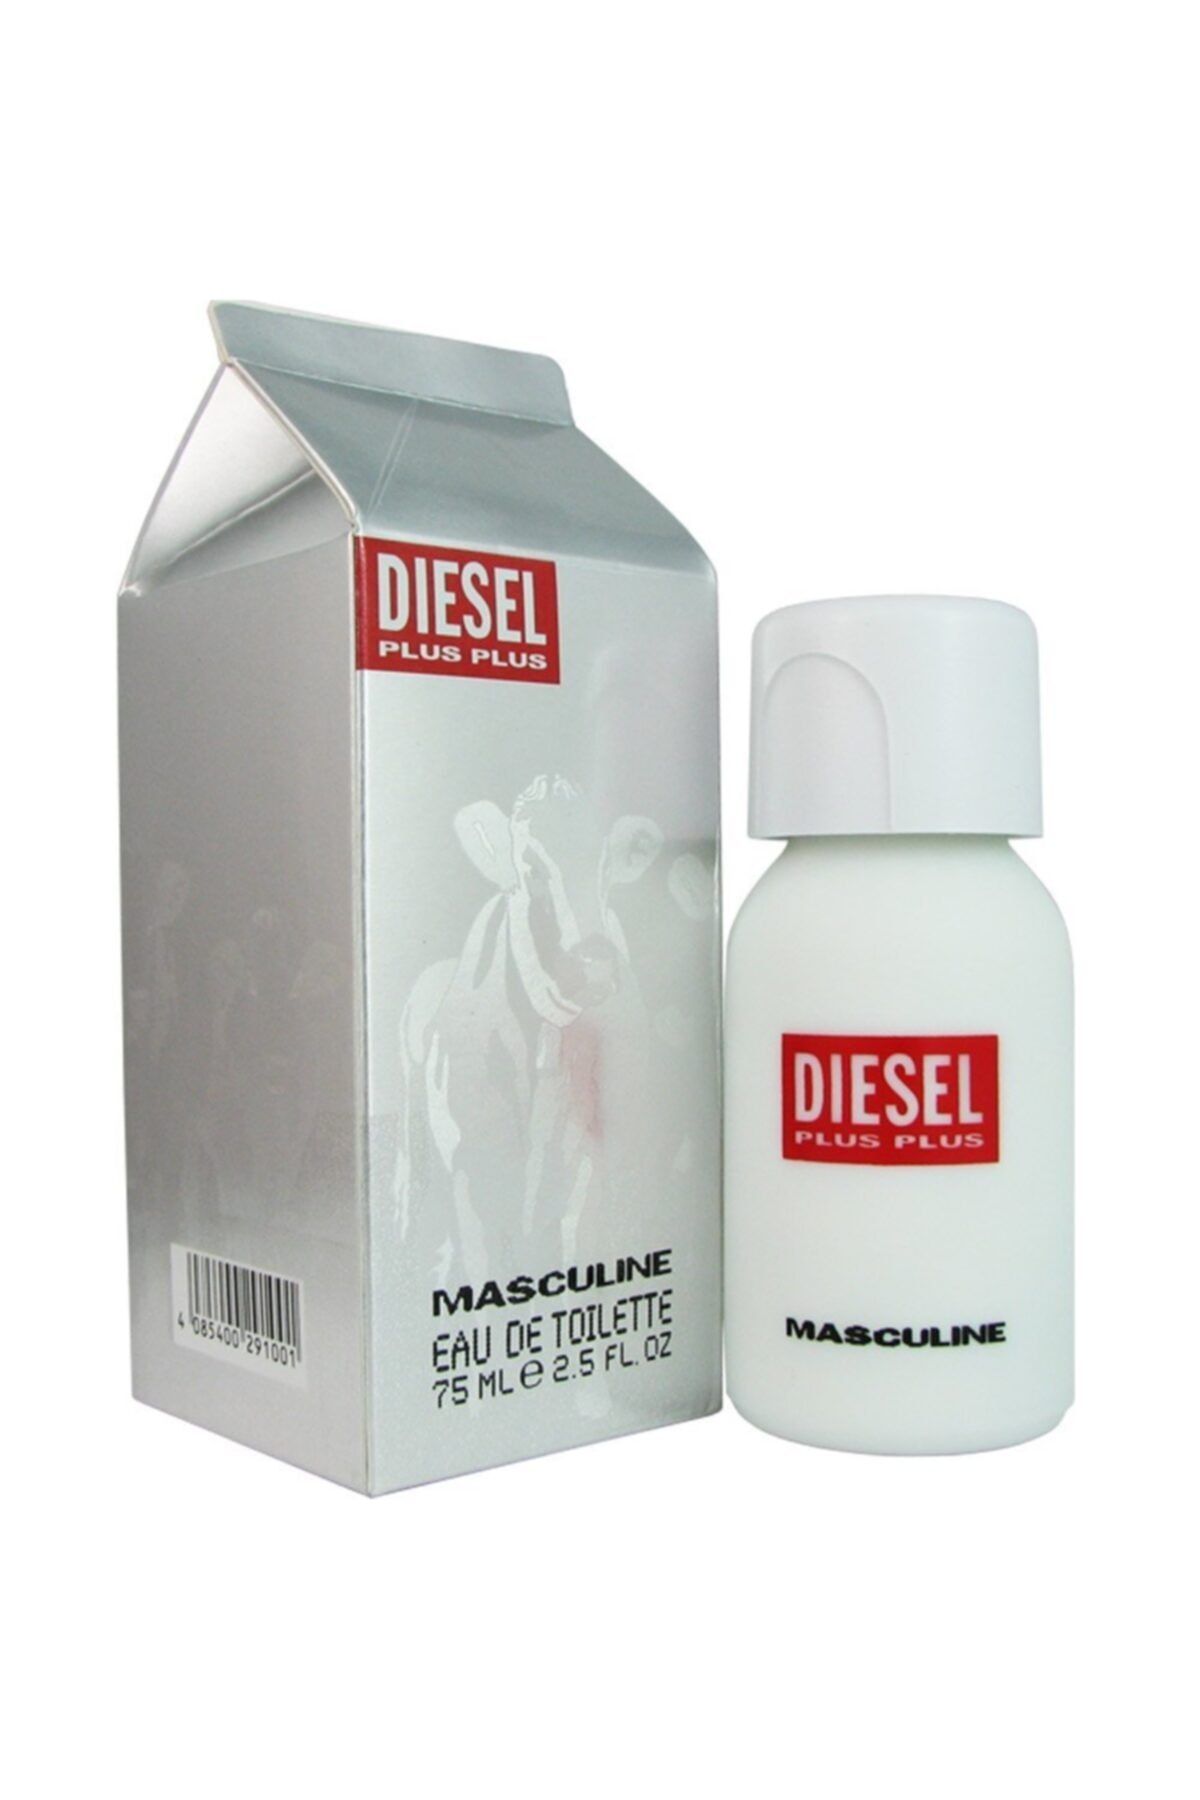 Diesel Plus Plus Masculıne 75 Ml Edt Erkek Parfümü